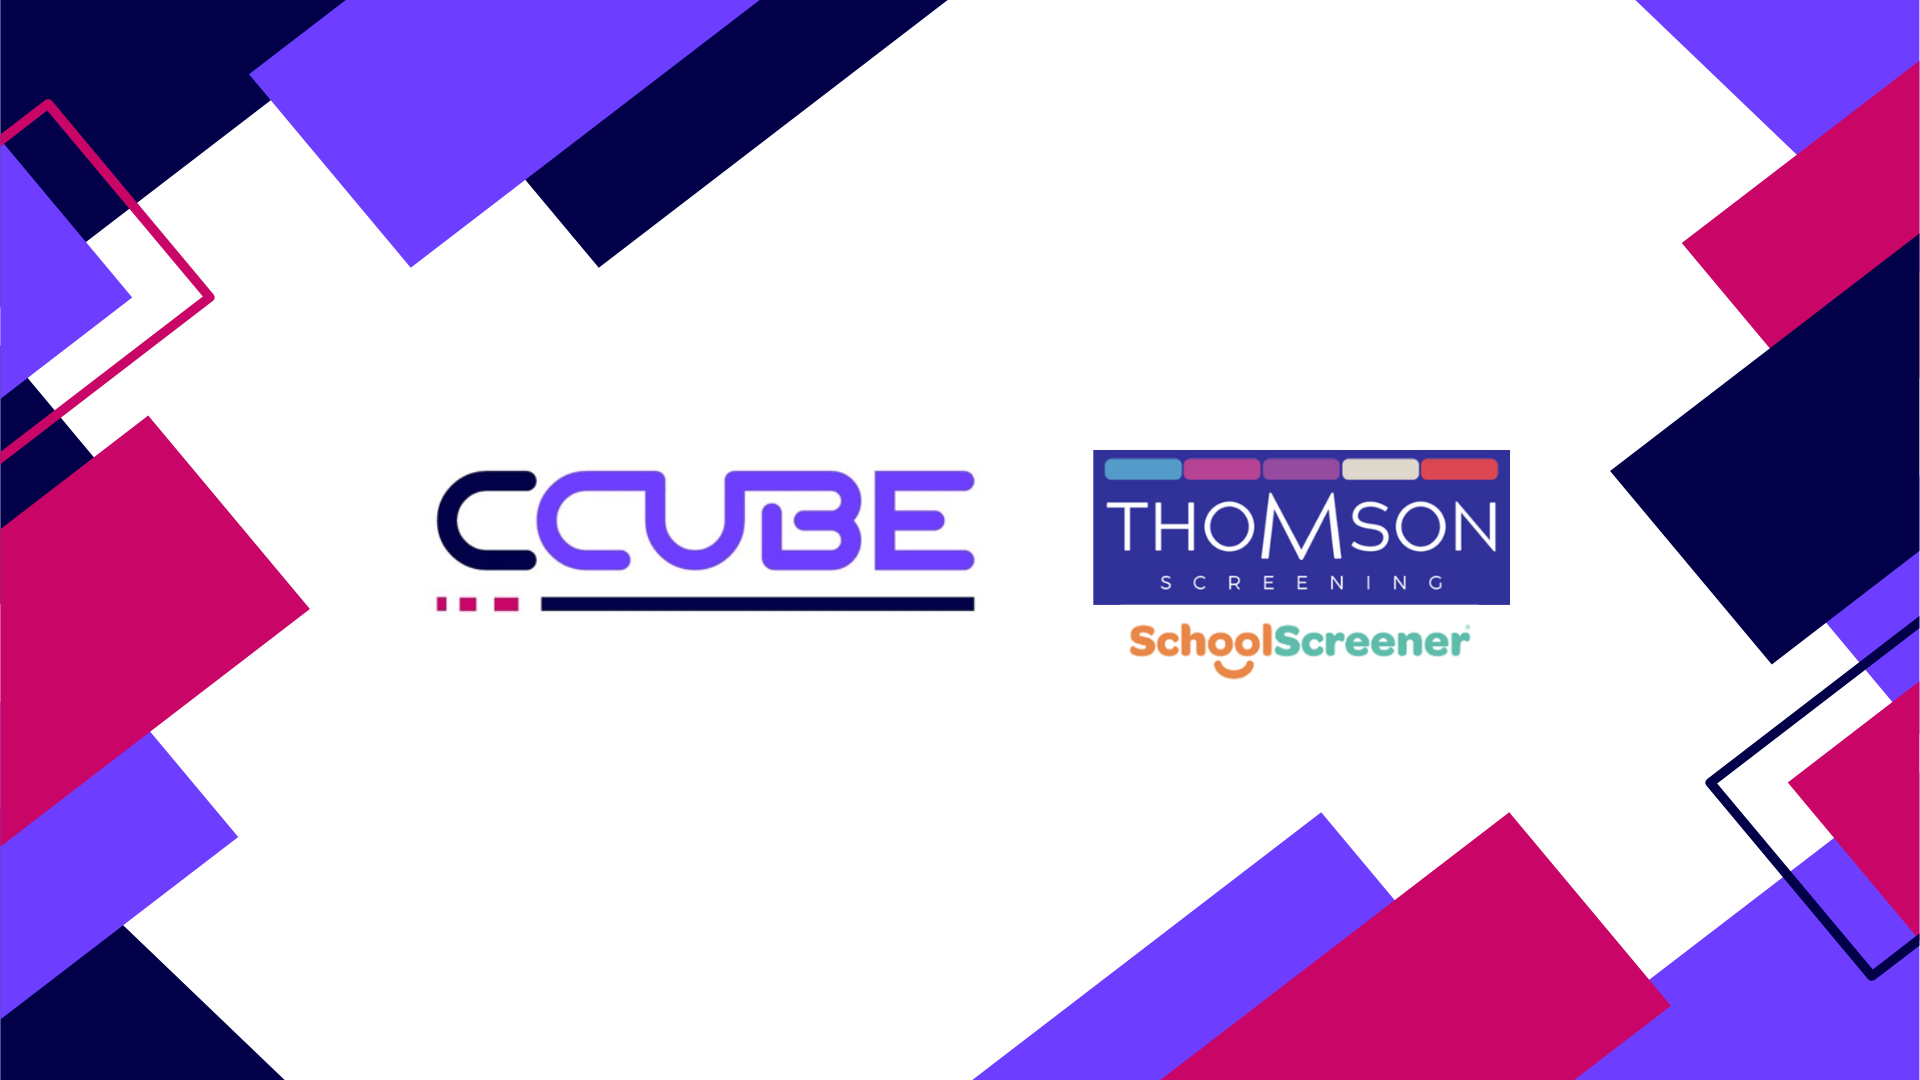 CCube Press Release - TSS acquisition